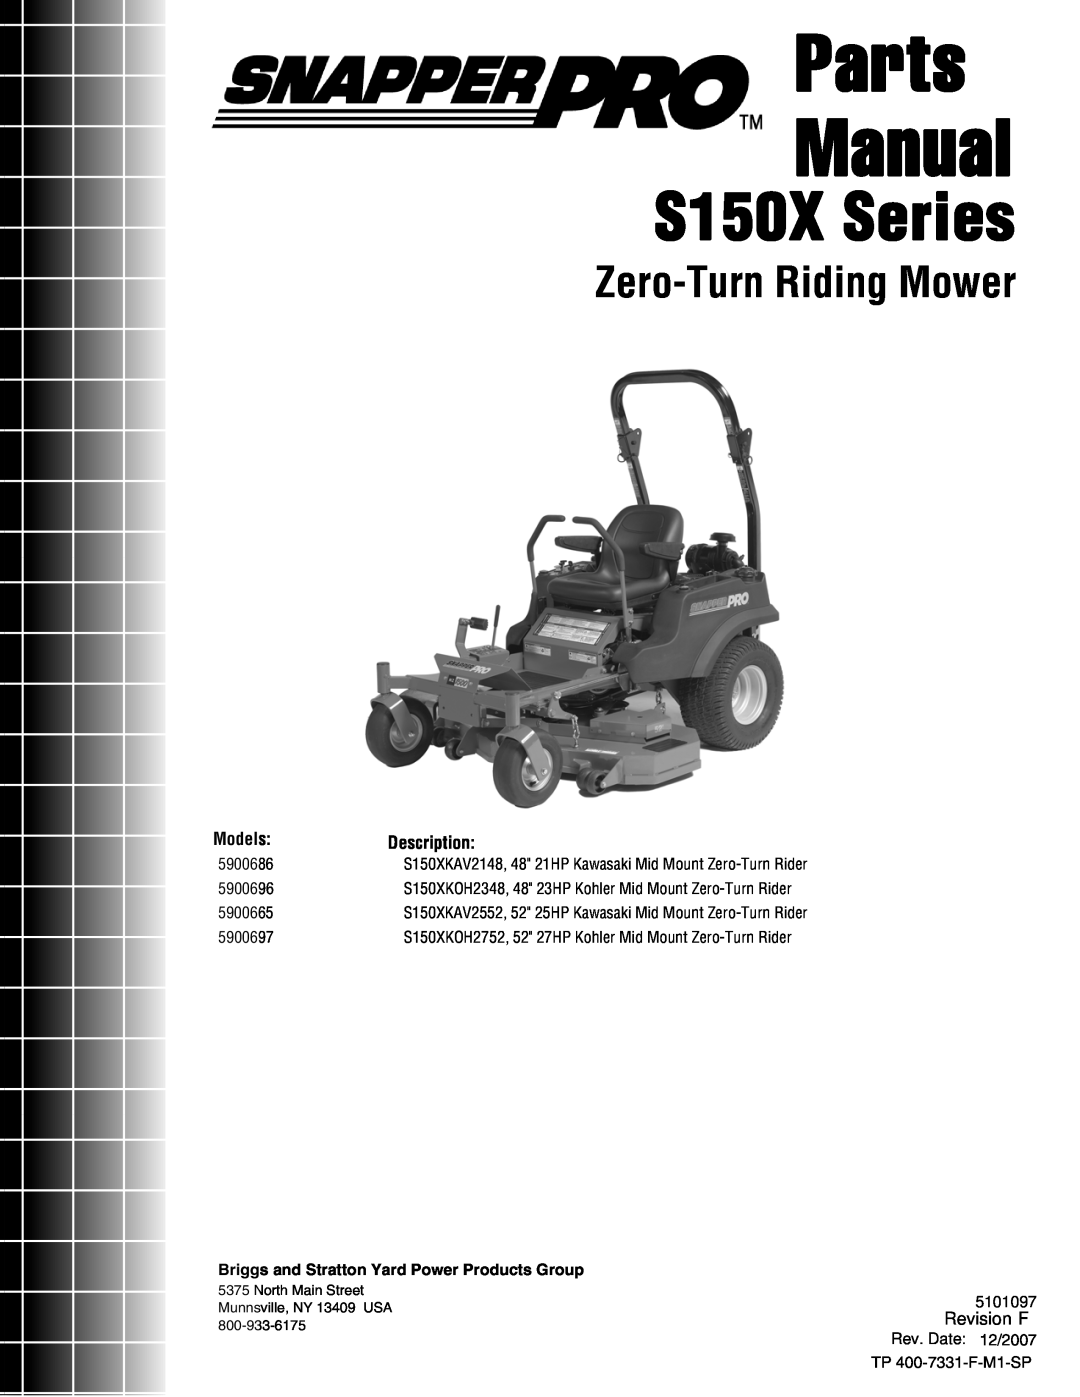 Snapper S150XKAV2148, S150XKOH2752 manual Parts Manual, S150X Series, Zero-TurnRiding Mower, Revision F, Models 